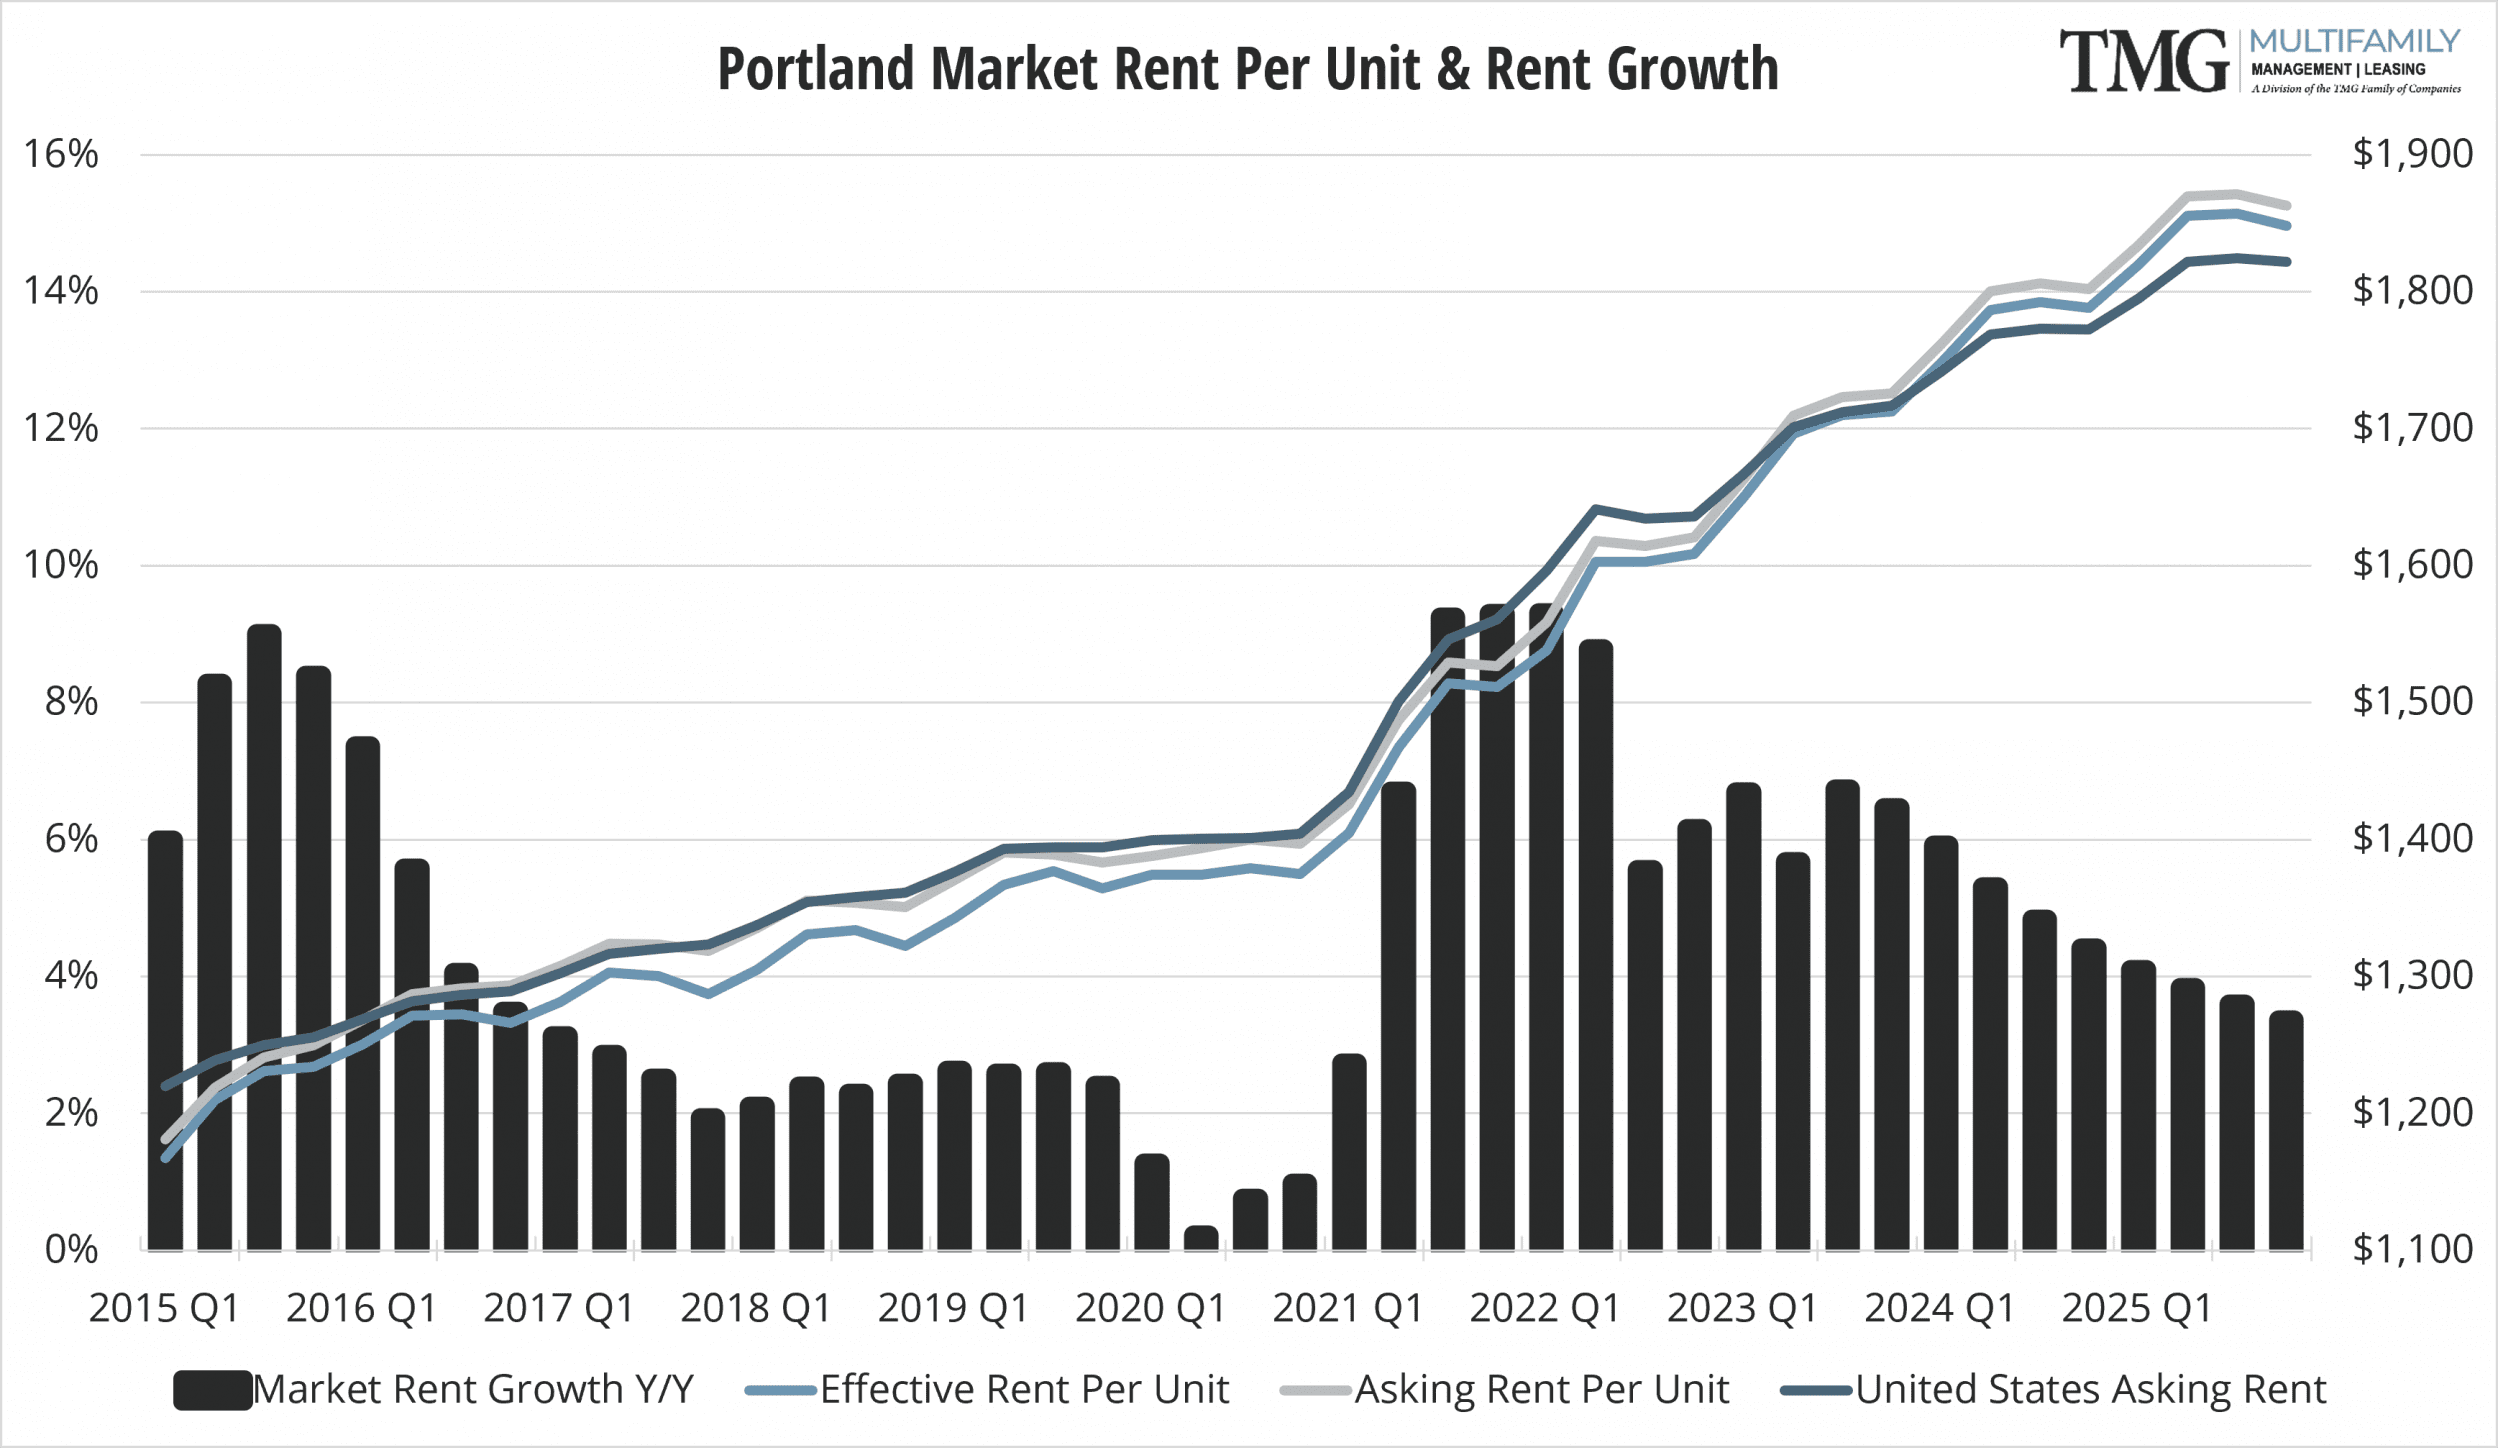 PDX Market Rent Per Unit & Rent Growth